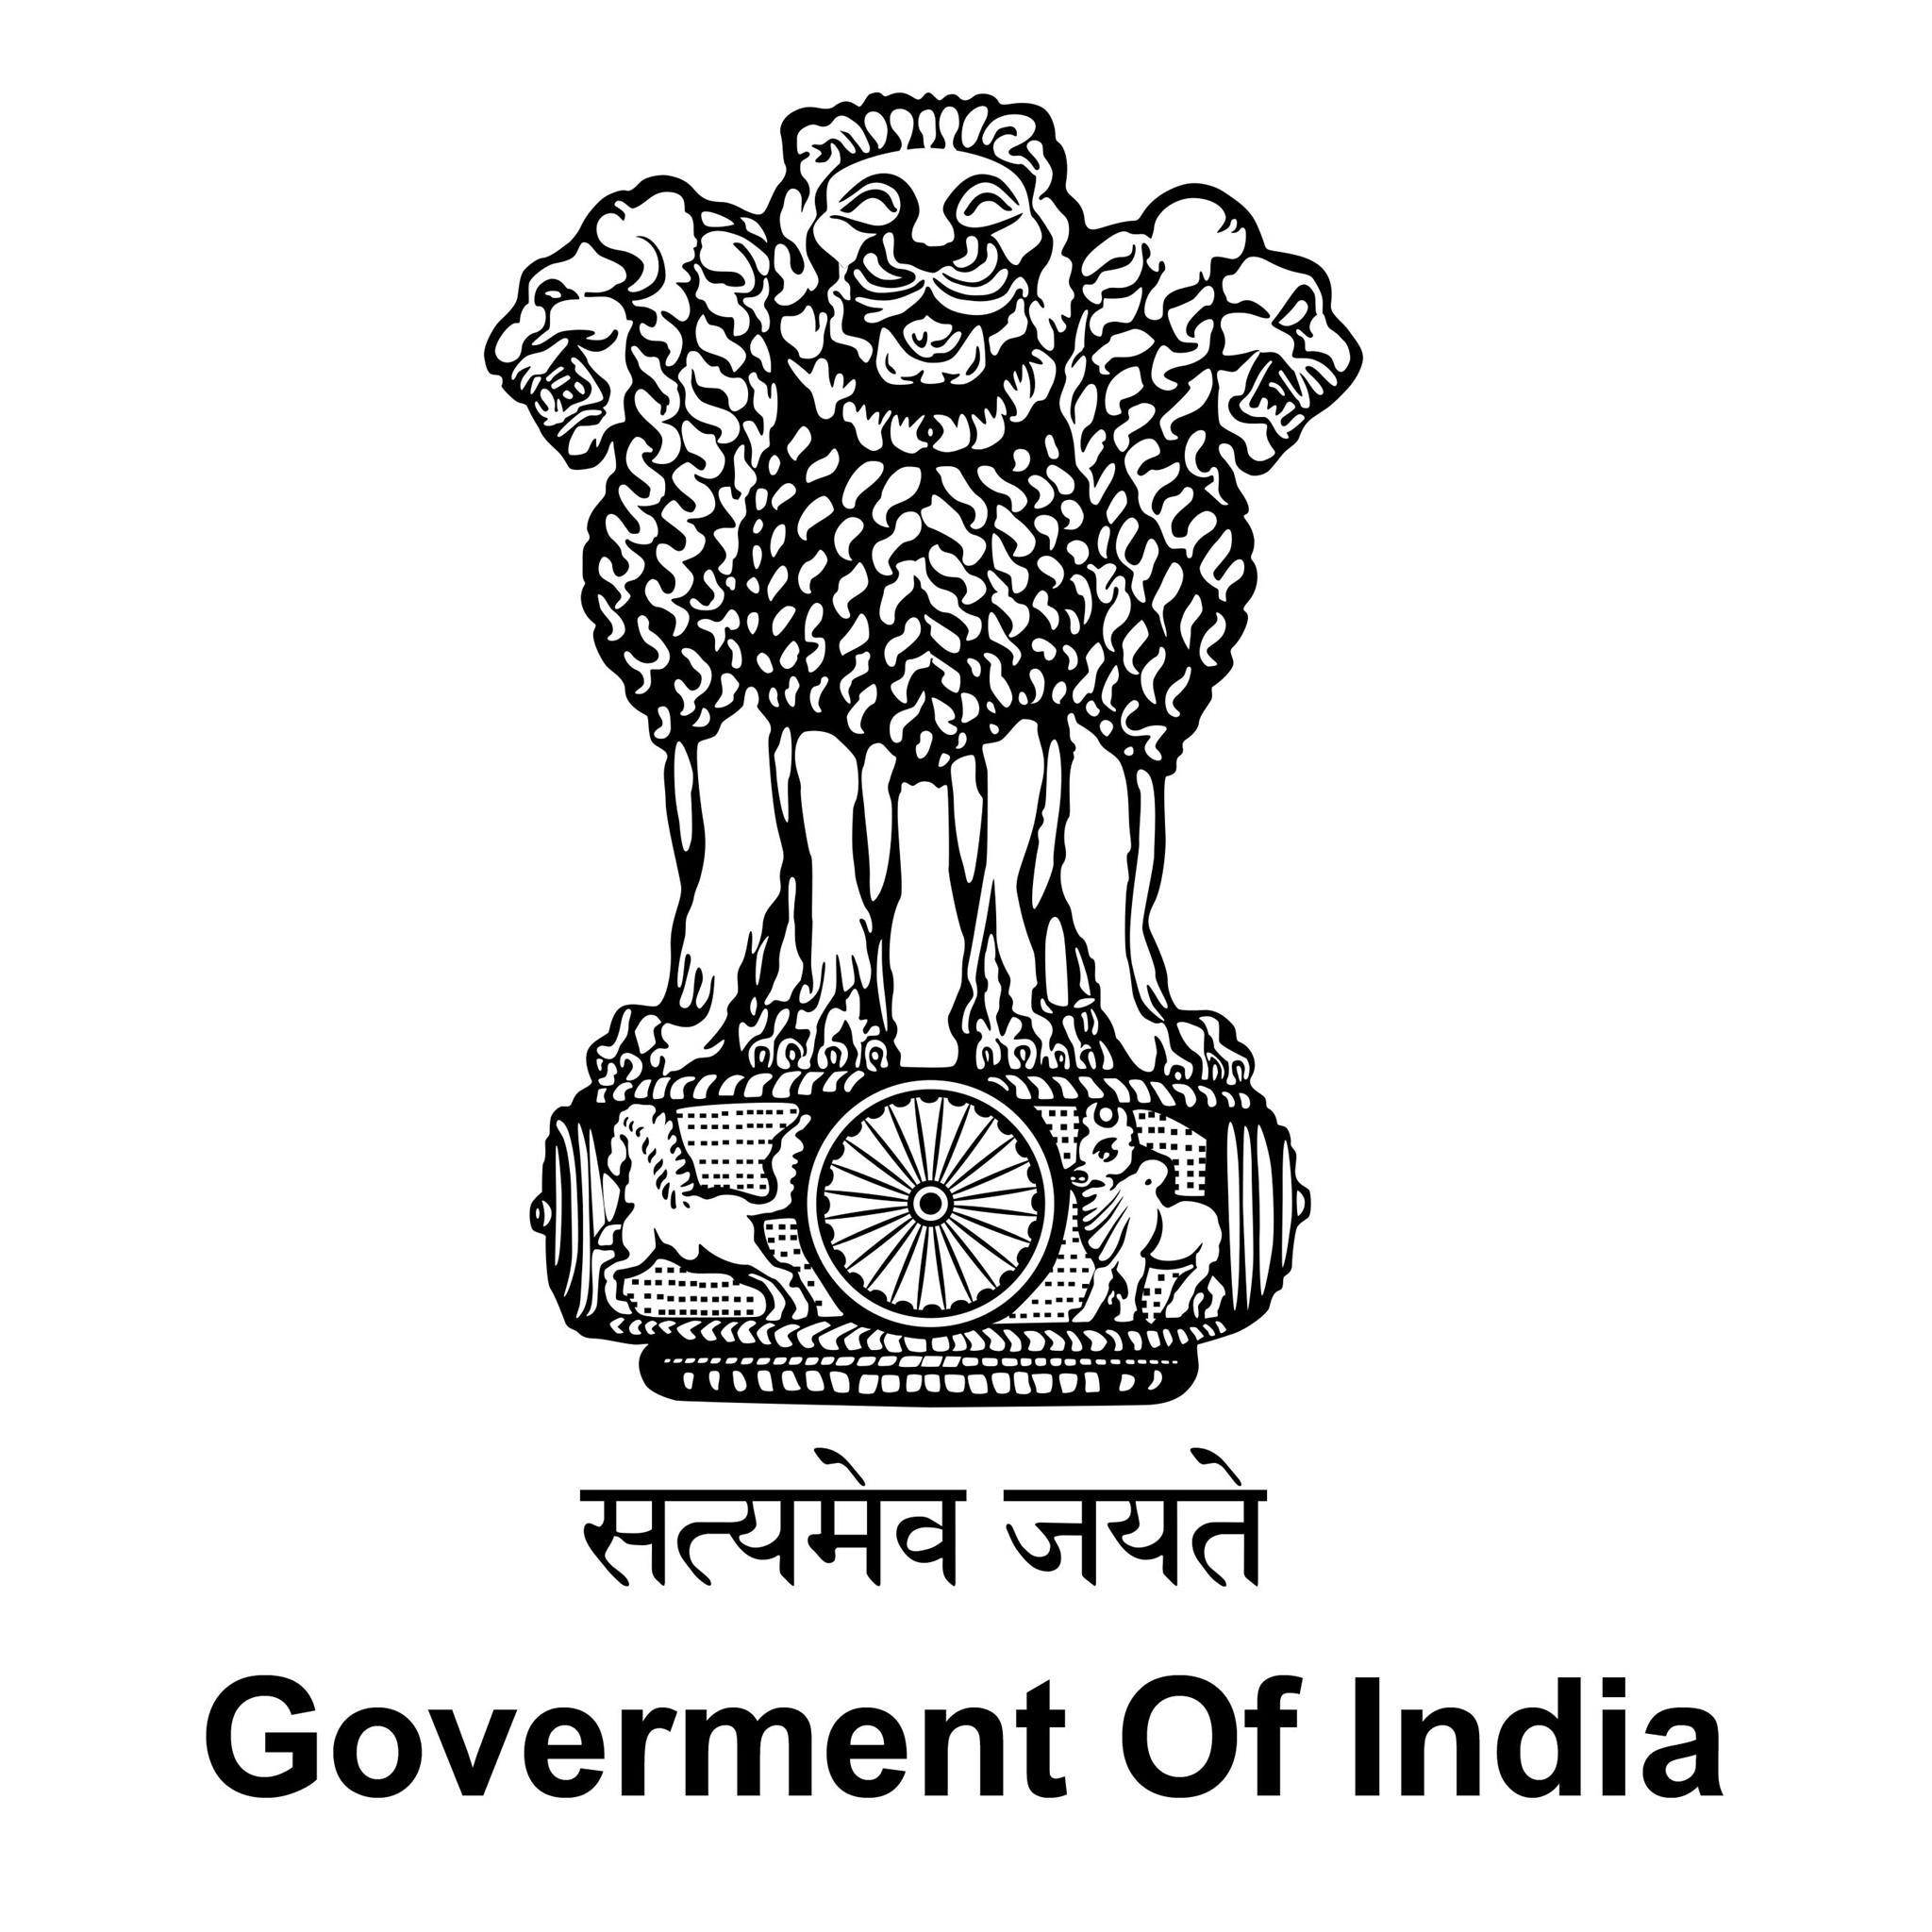 Government Logo - 10 logo designs of Government of India setups or companies